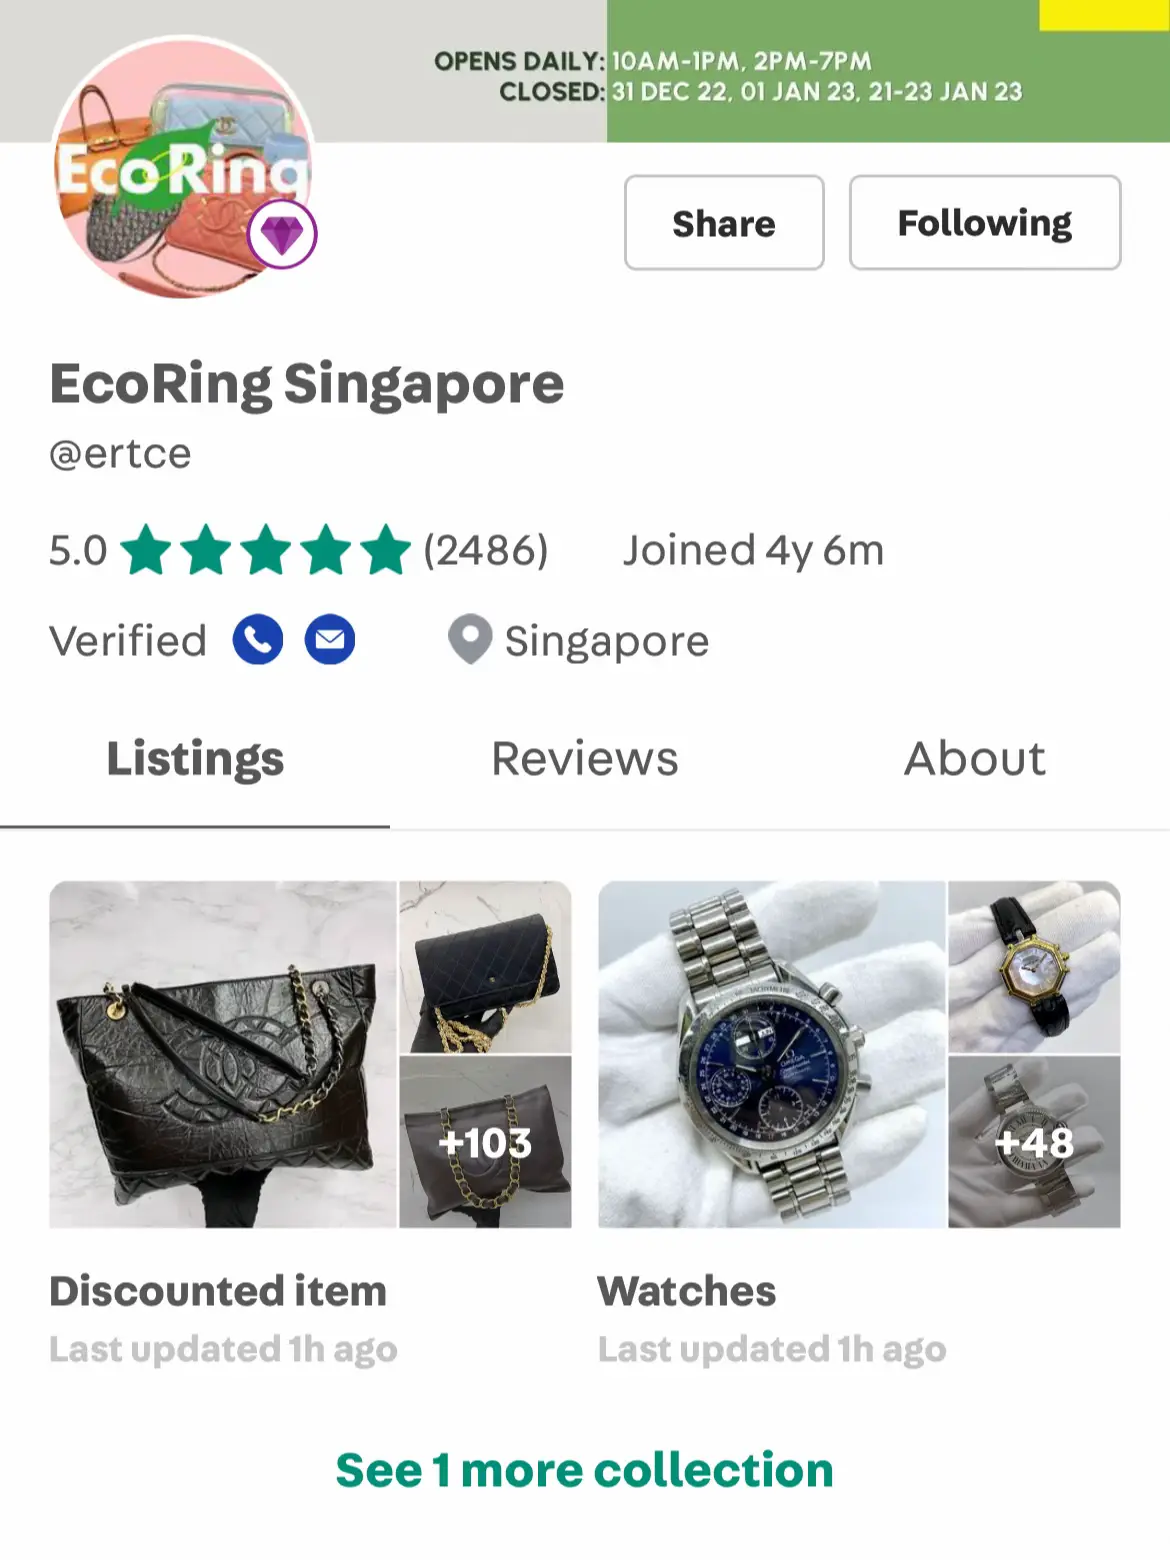 EcoRing Singapore - Corporate Video (full) 